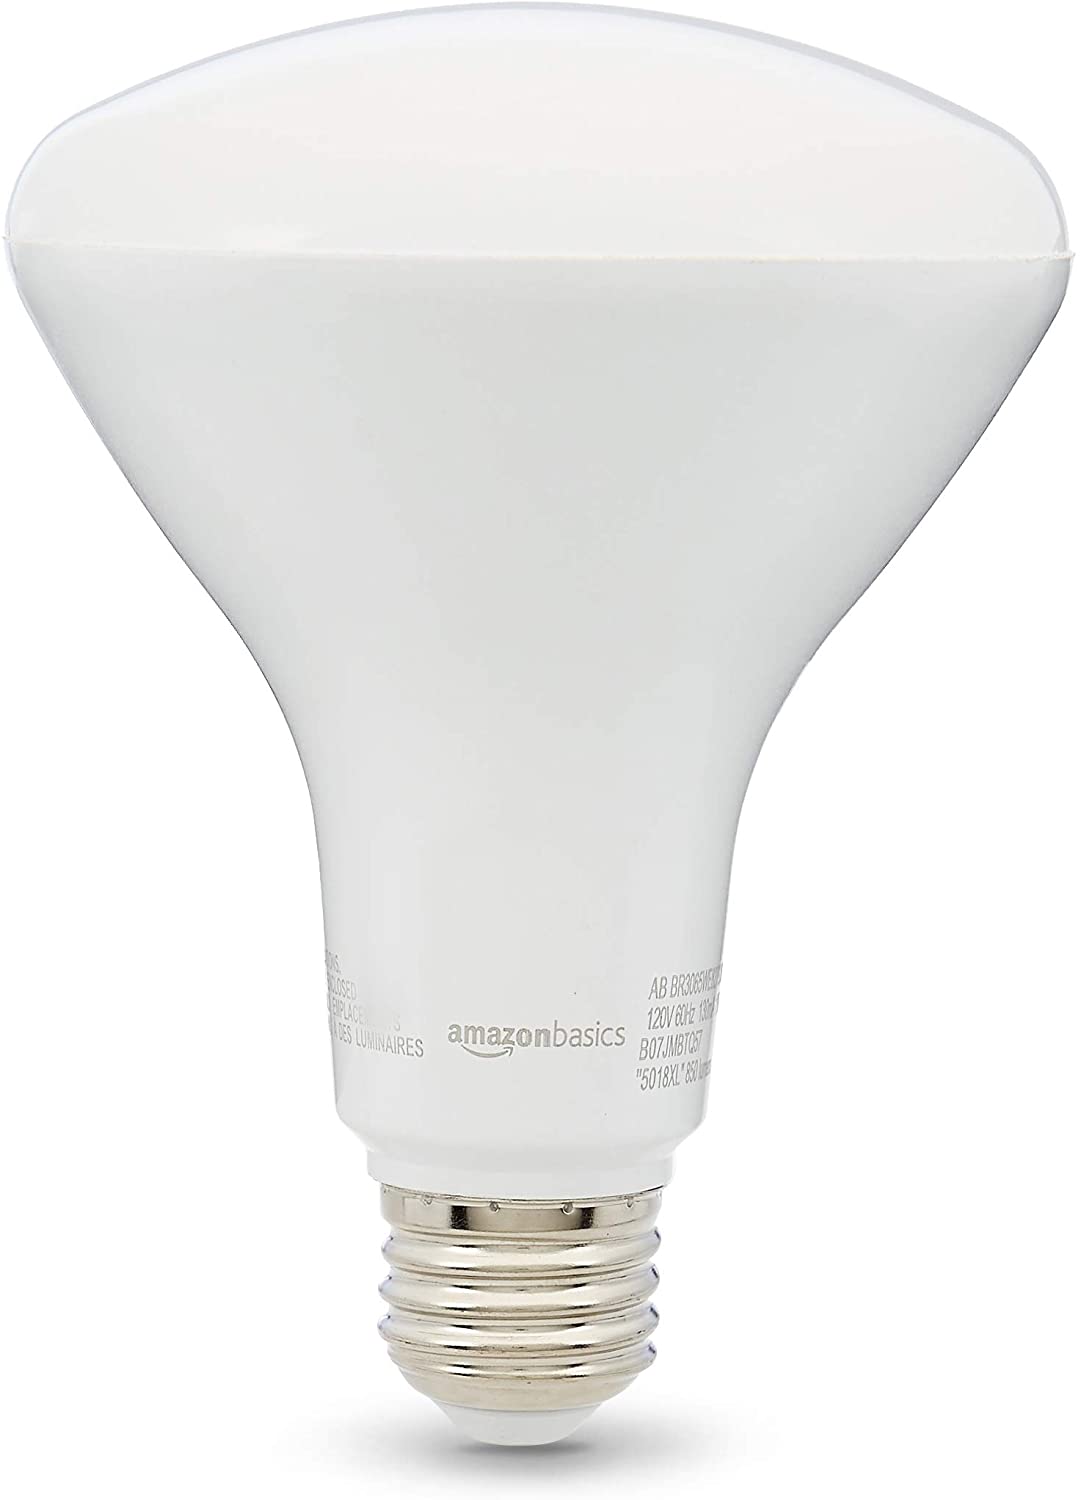 Basics 65W Equivalent, Soft White, Dimmable, 10,000 Hour Lifetime, BR30 LED Light Bulb | 6-Pack